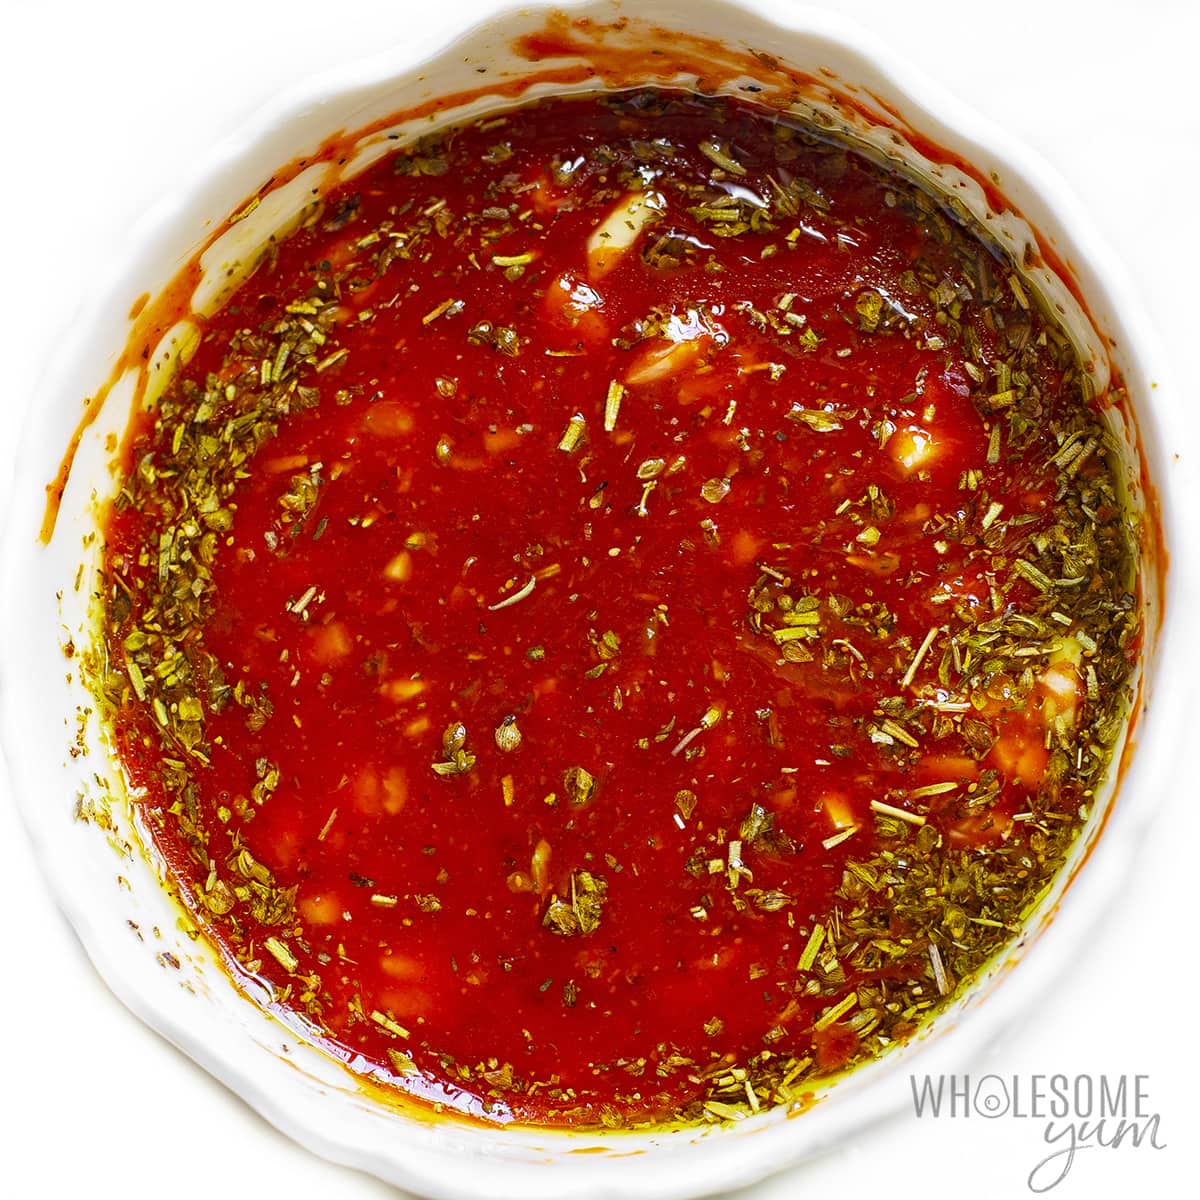 Mix the honey sriracha sauce in a bowl.